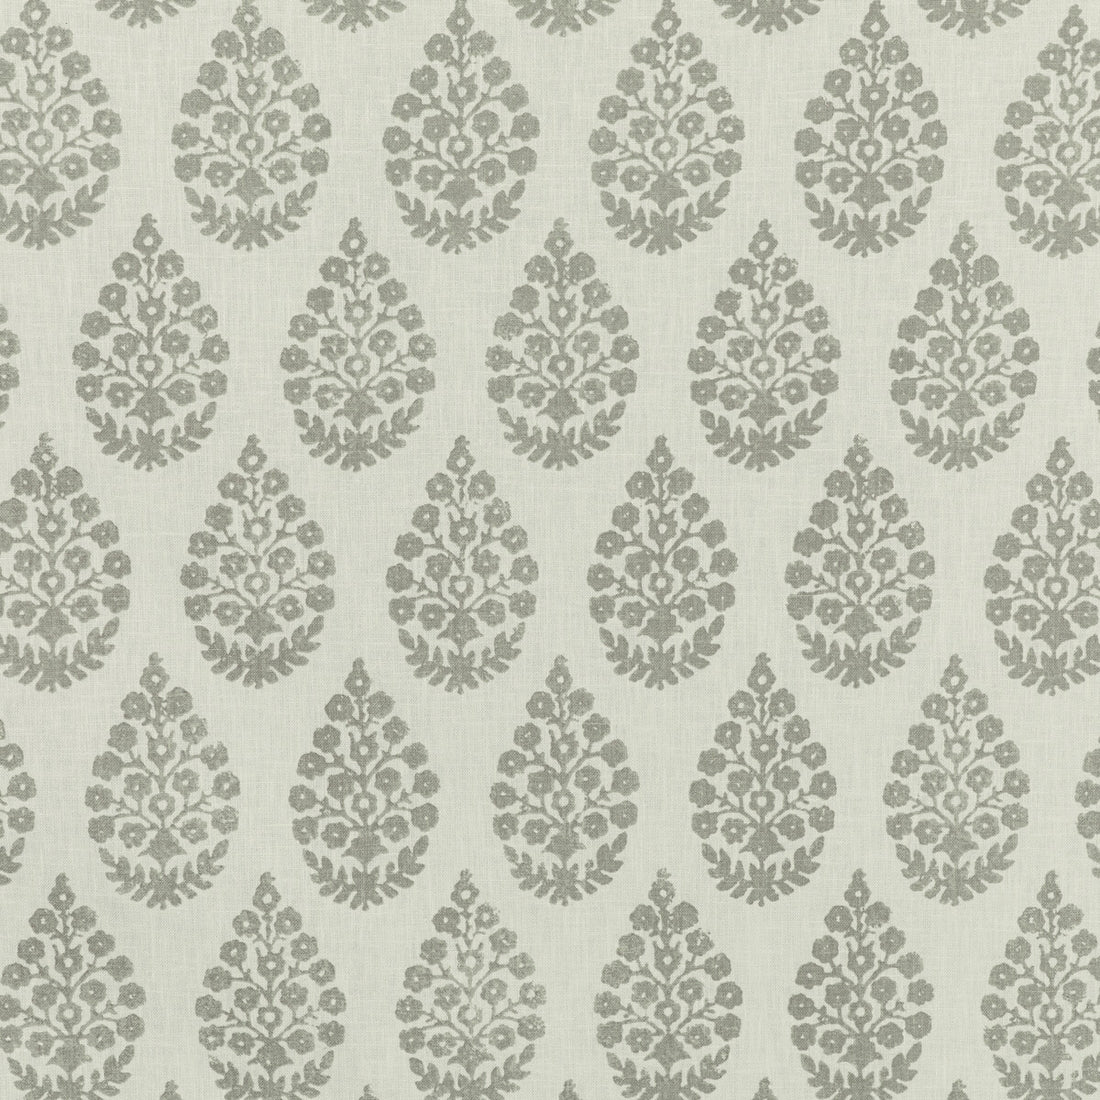 Kravet Basics fabric in tajpaisley-11 color - pattern TAJPAISLEY.11.0 - by Kravet Basics in the L&